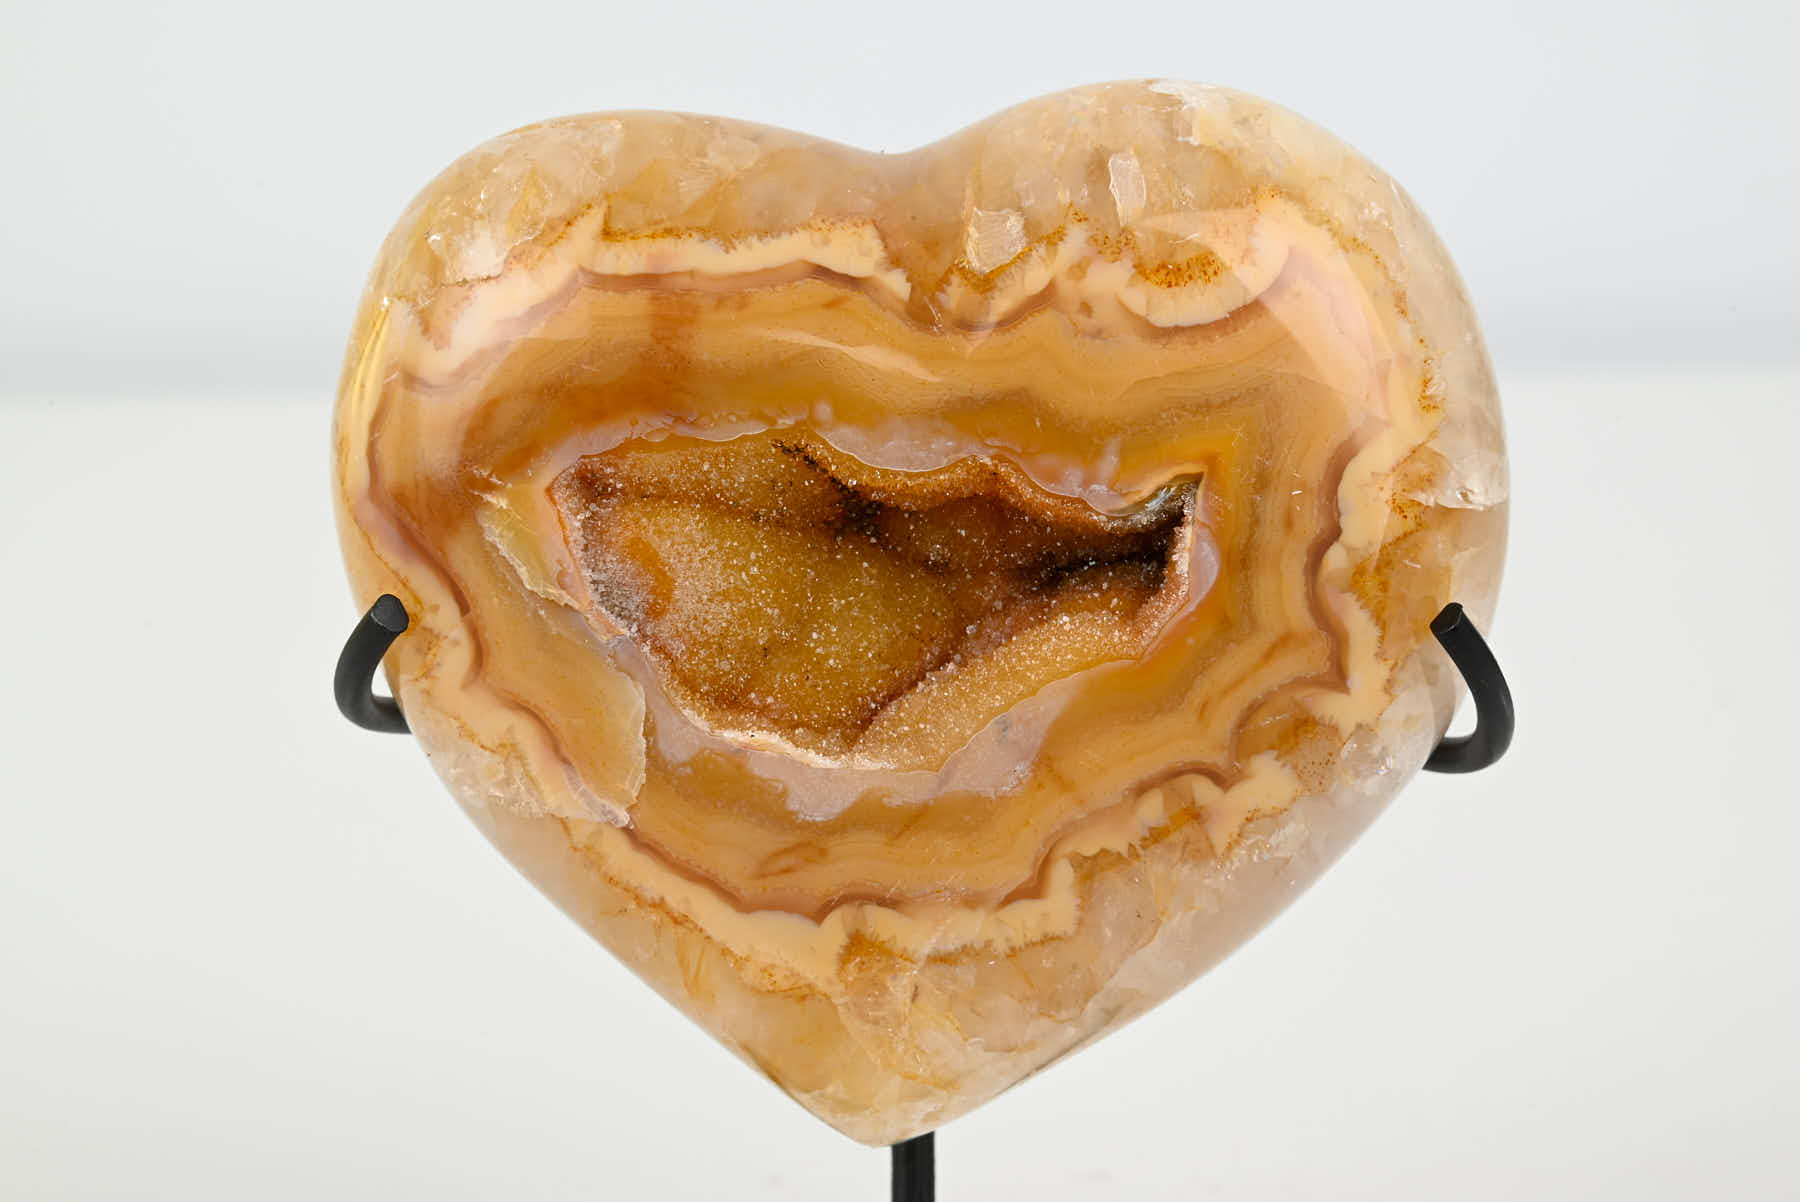 Extra Quality Agate Crystal Heart - 0.48kg, 11cm high - #HTAGAT-34021